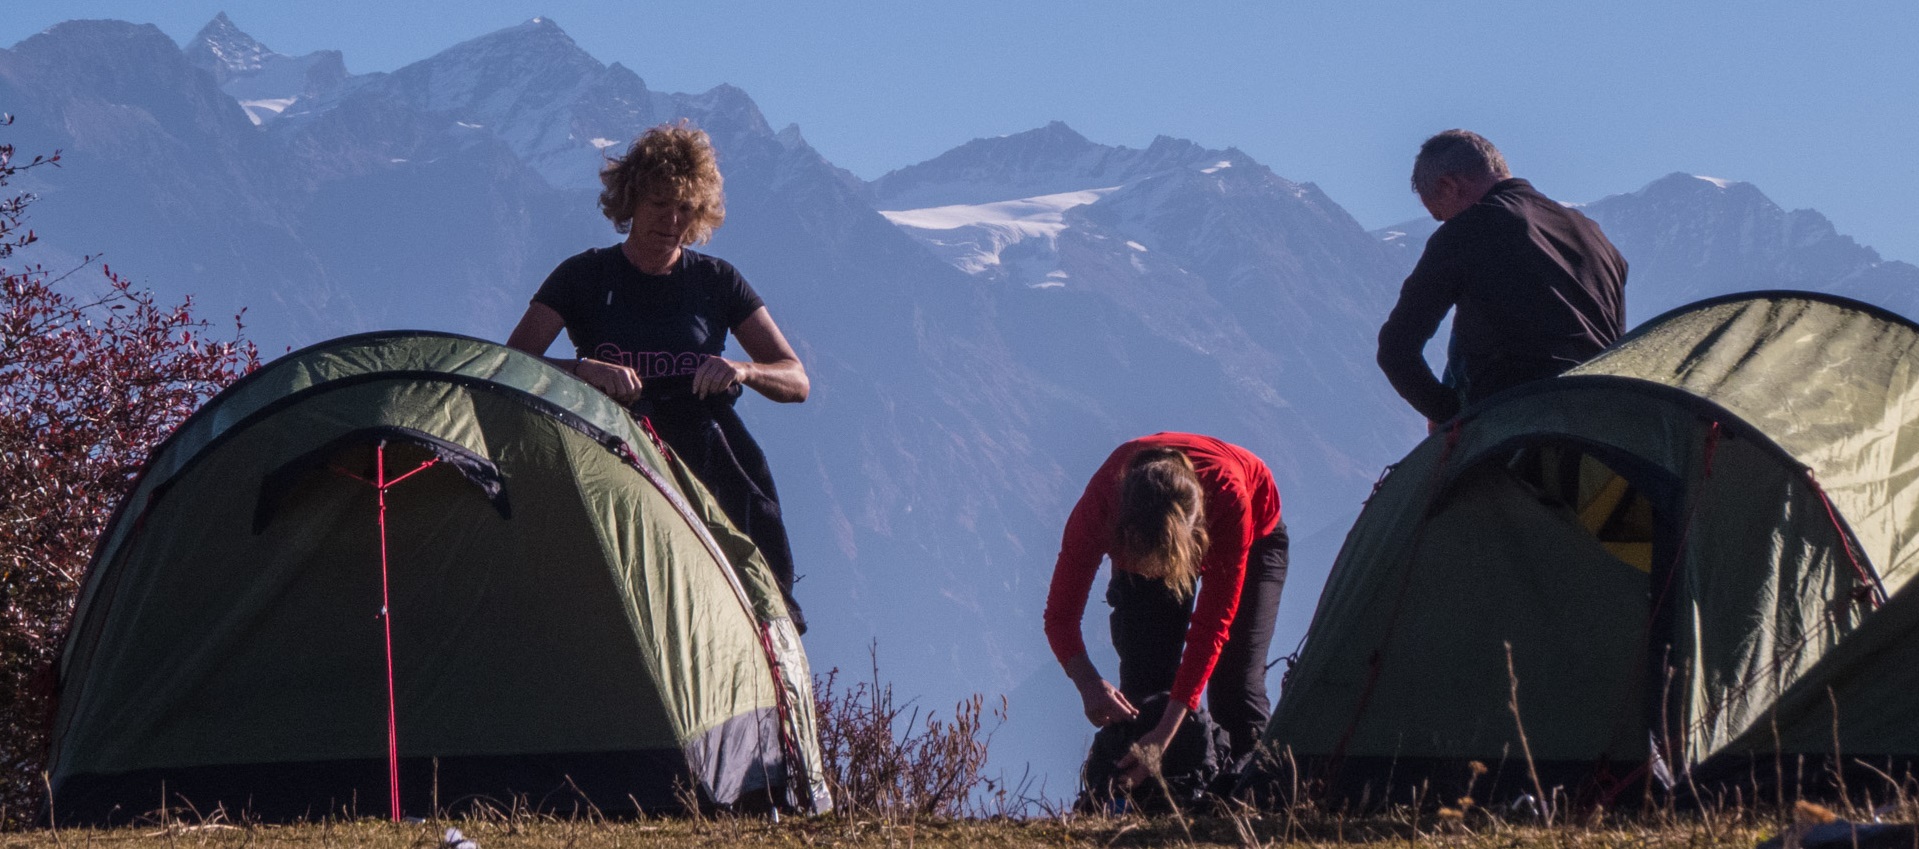 Sturdy 4 season trekking tents by Himalayan Ecotourism